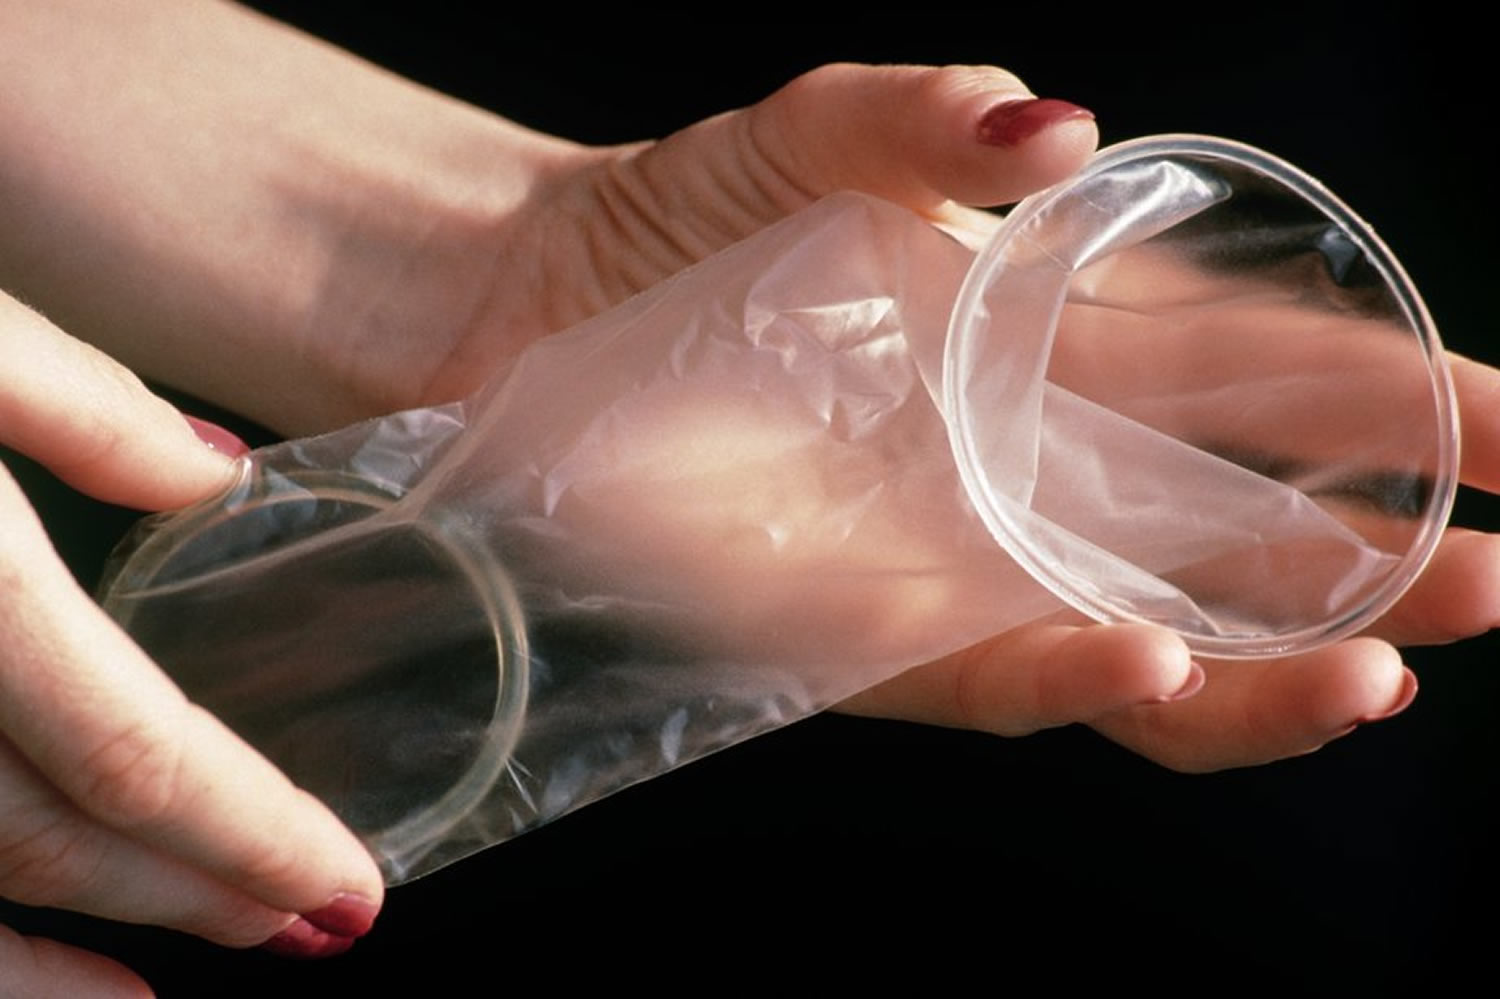 Men Vomen Kondom Xxx - Female Condom - How to Insert Female Condom, Side Effects